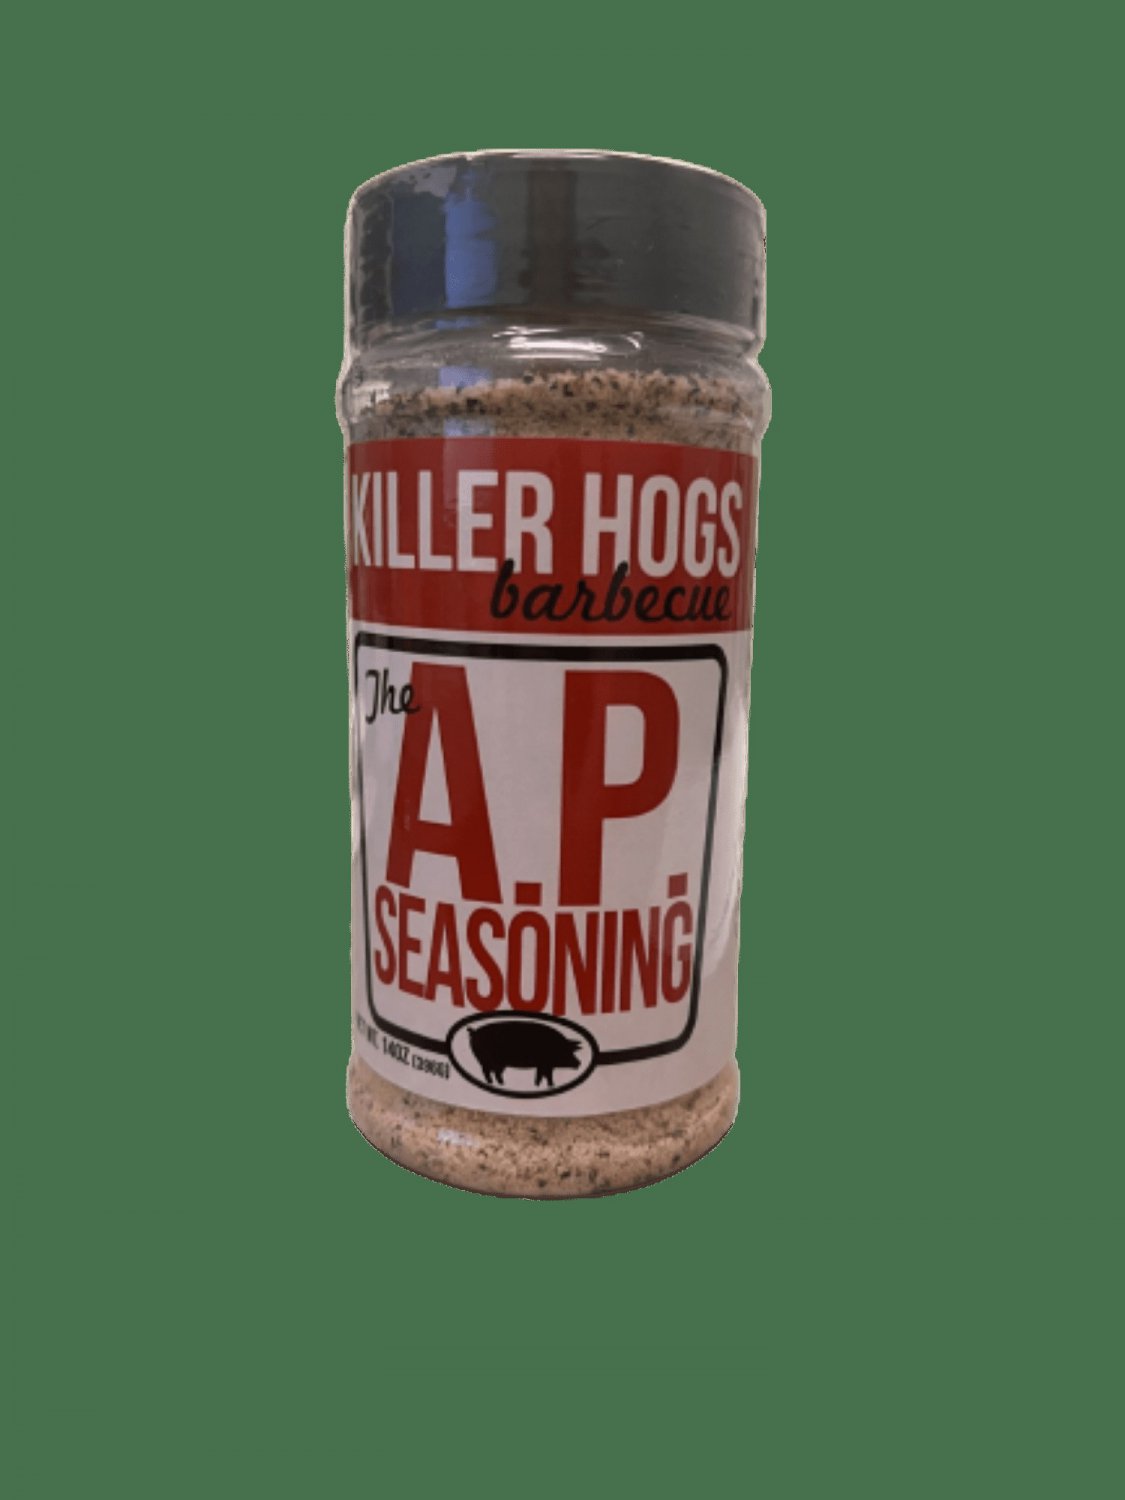 KILLER HOGS 14 oz. The A. P. Seasoning Rub H2Q-0005 - The